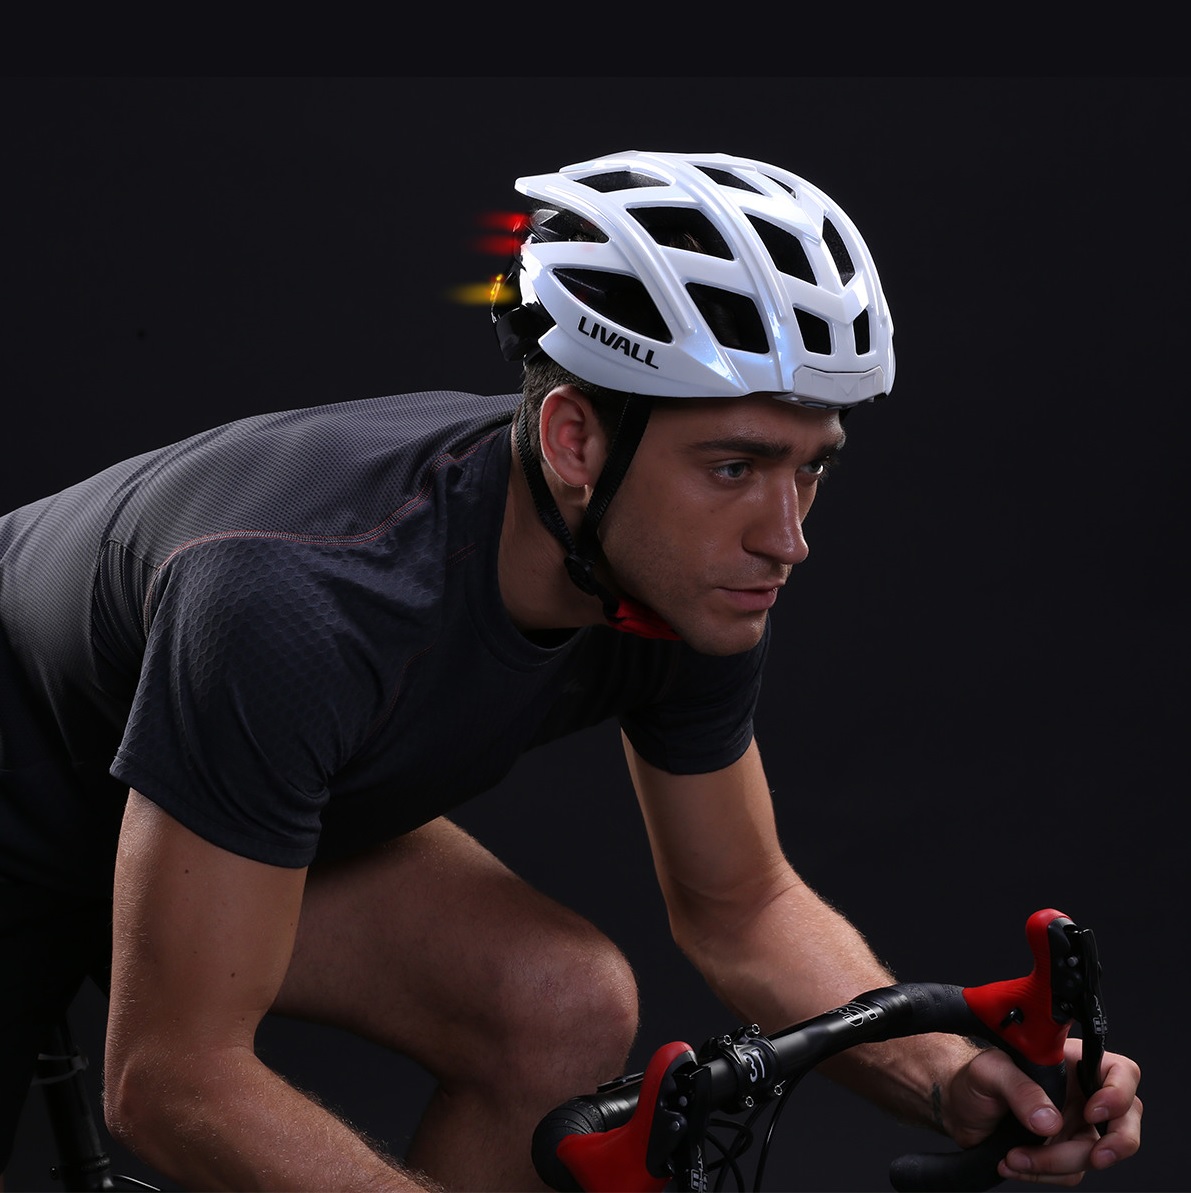 Livall BH60SE sports cycling helmet